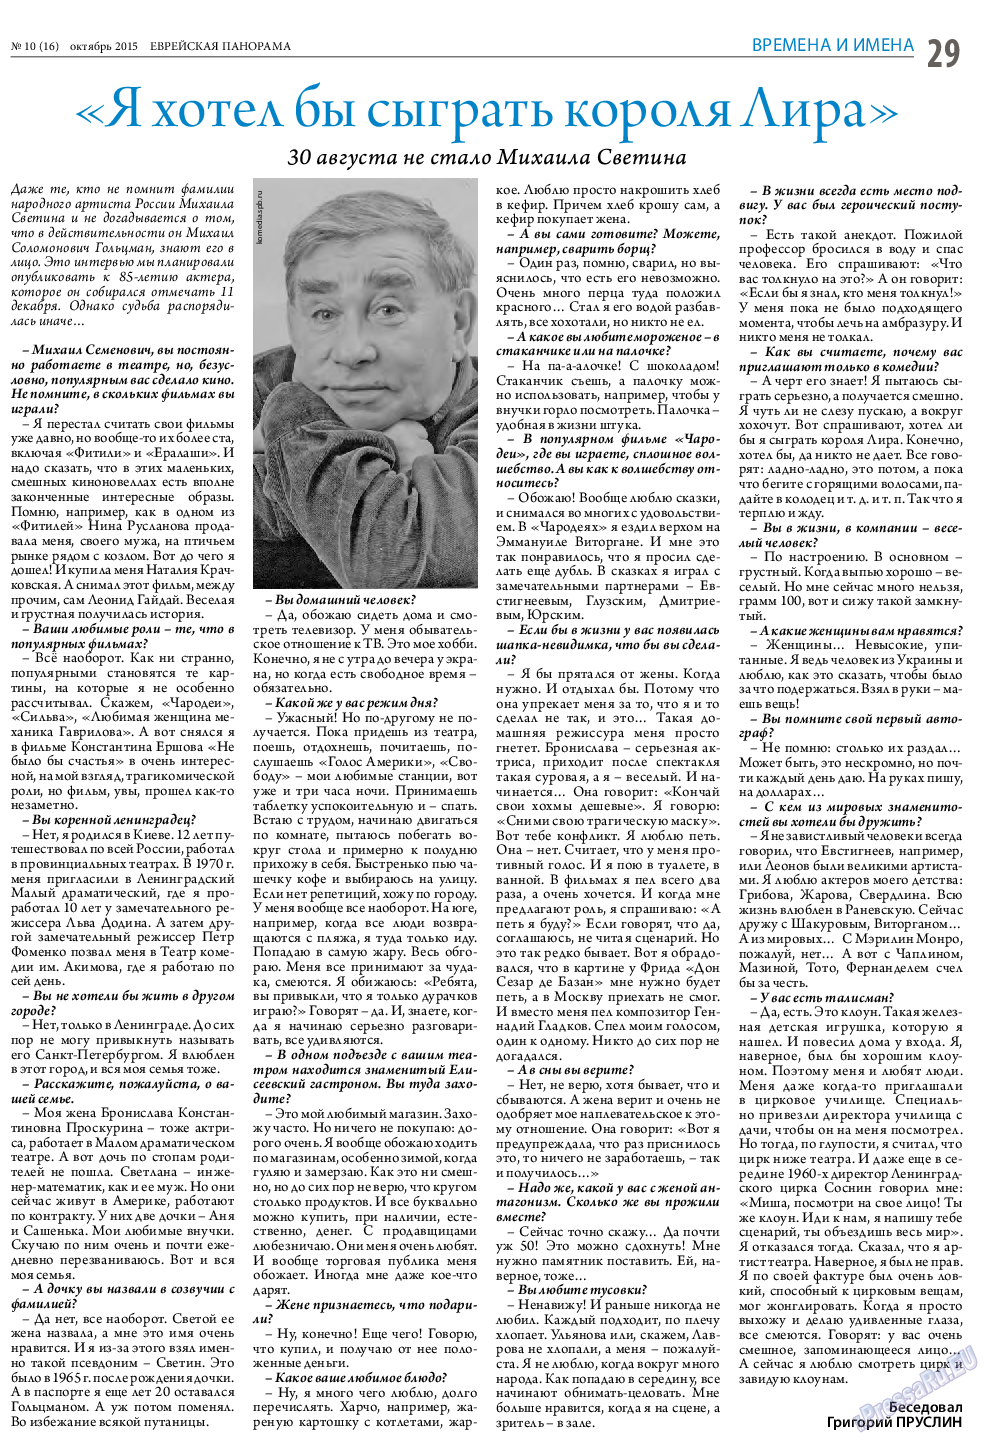 Еврейская панорама, газета. 2015 №10 стр.29